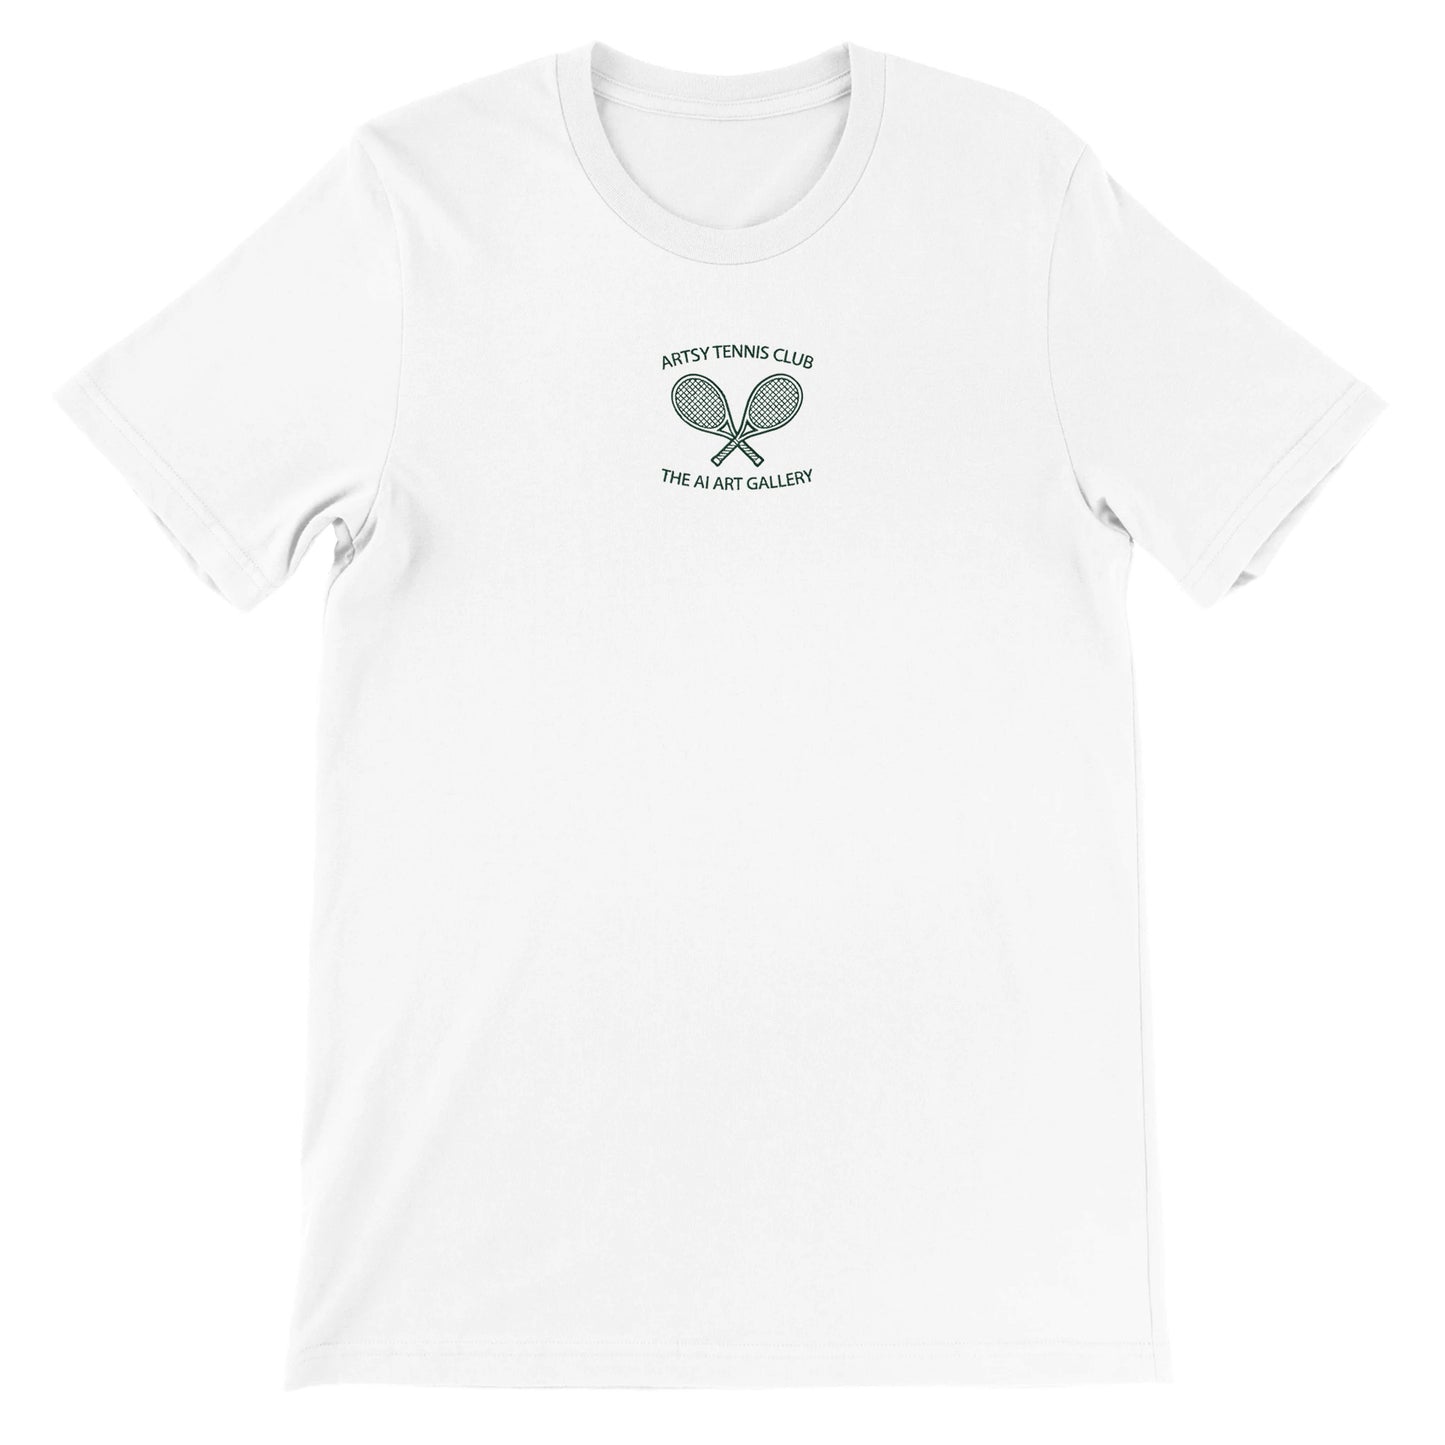 CHAIN STITCH TENNIS / T-Shirt / white / embroidered